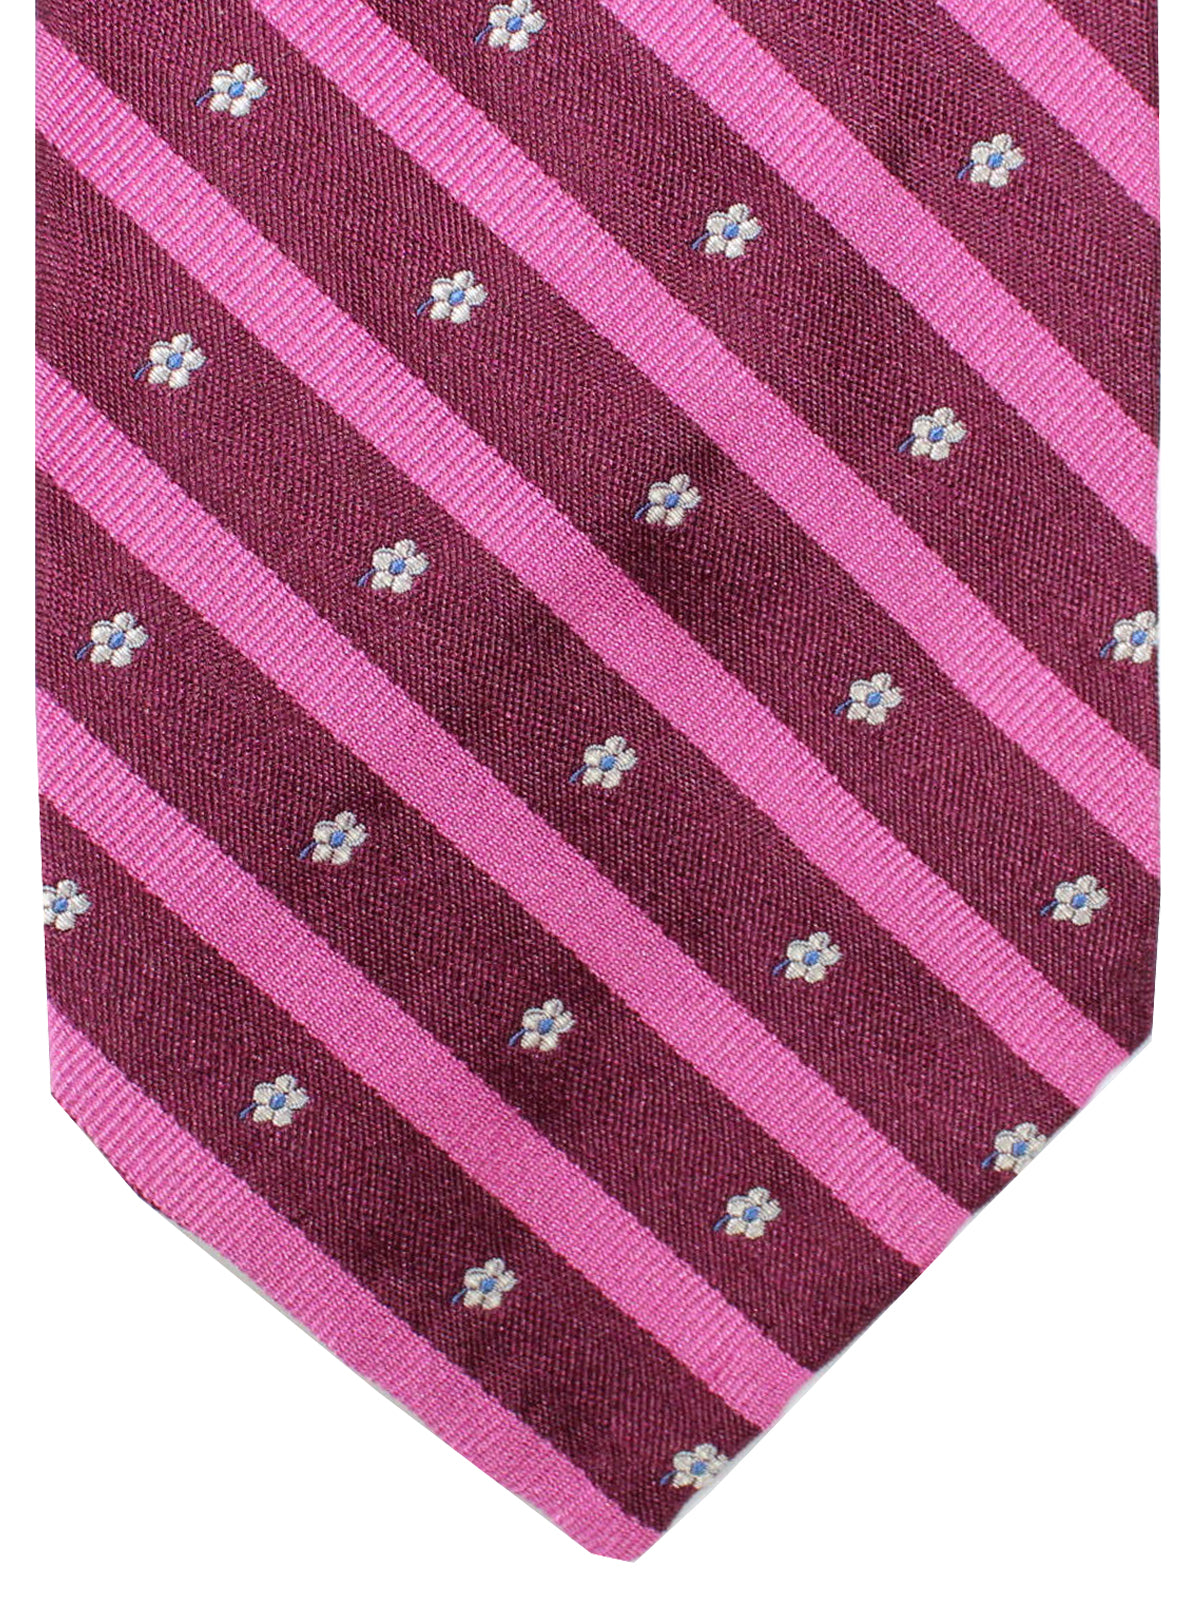 Finamore Sevenfold Tie Fuchsia Pink Stripes